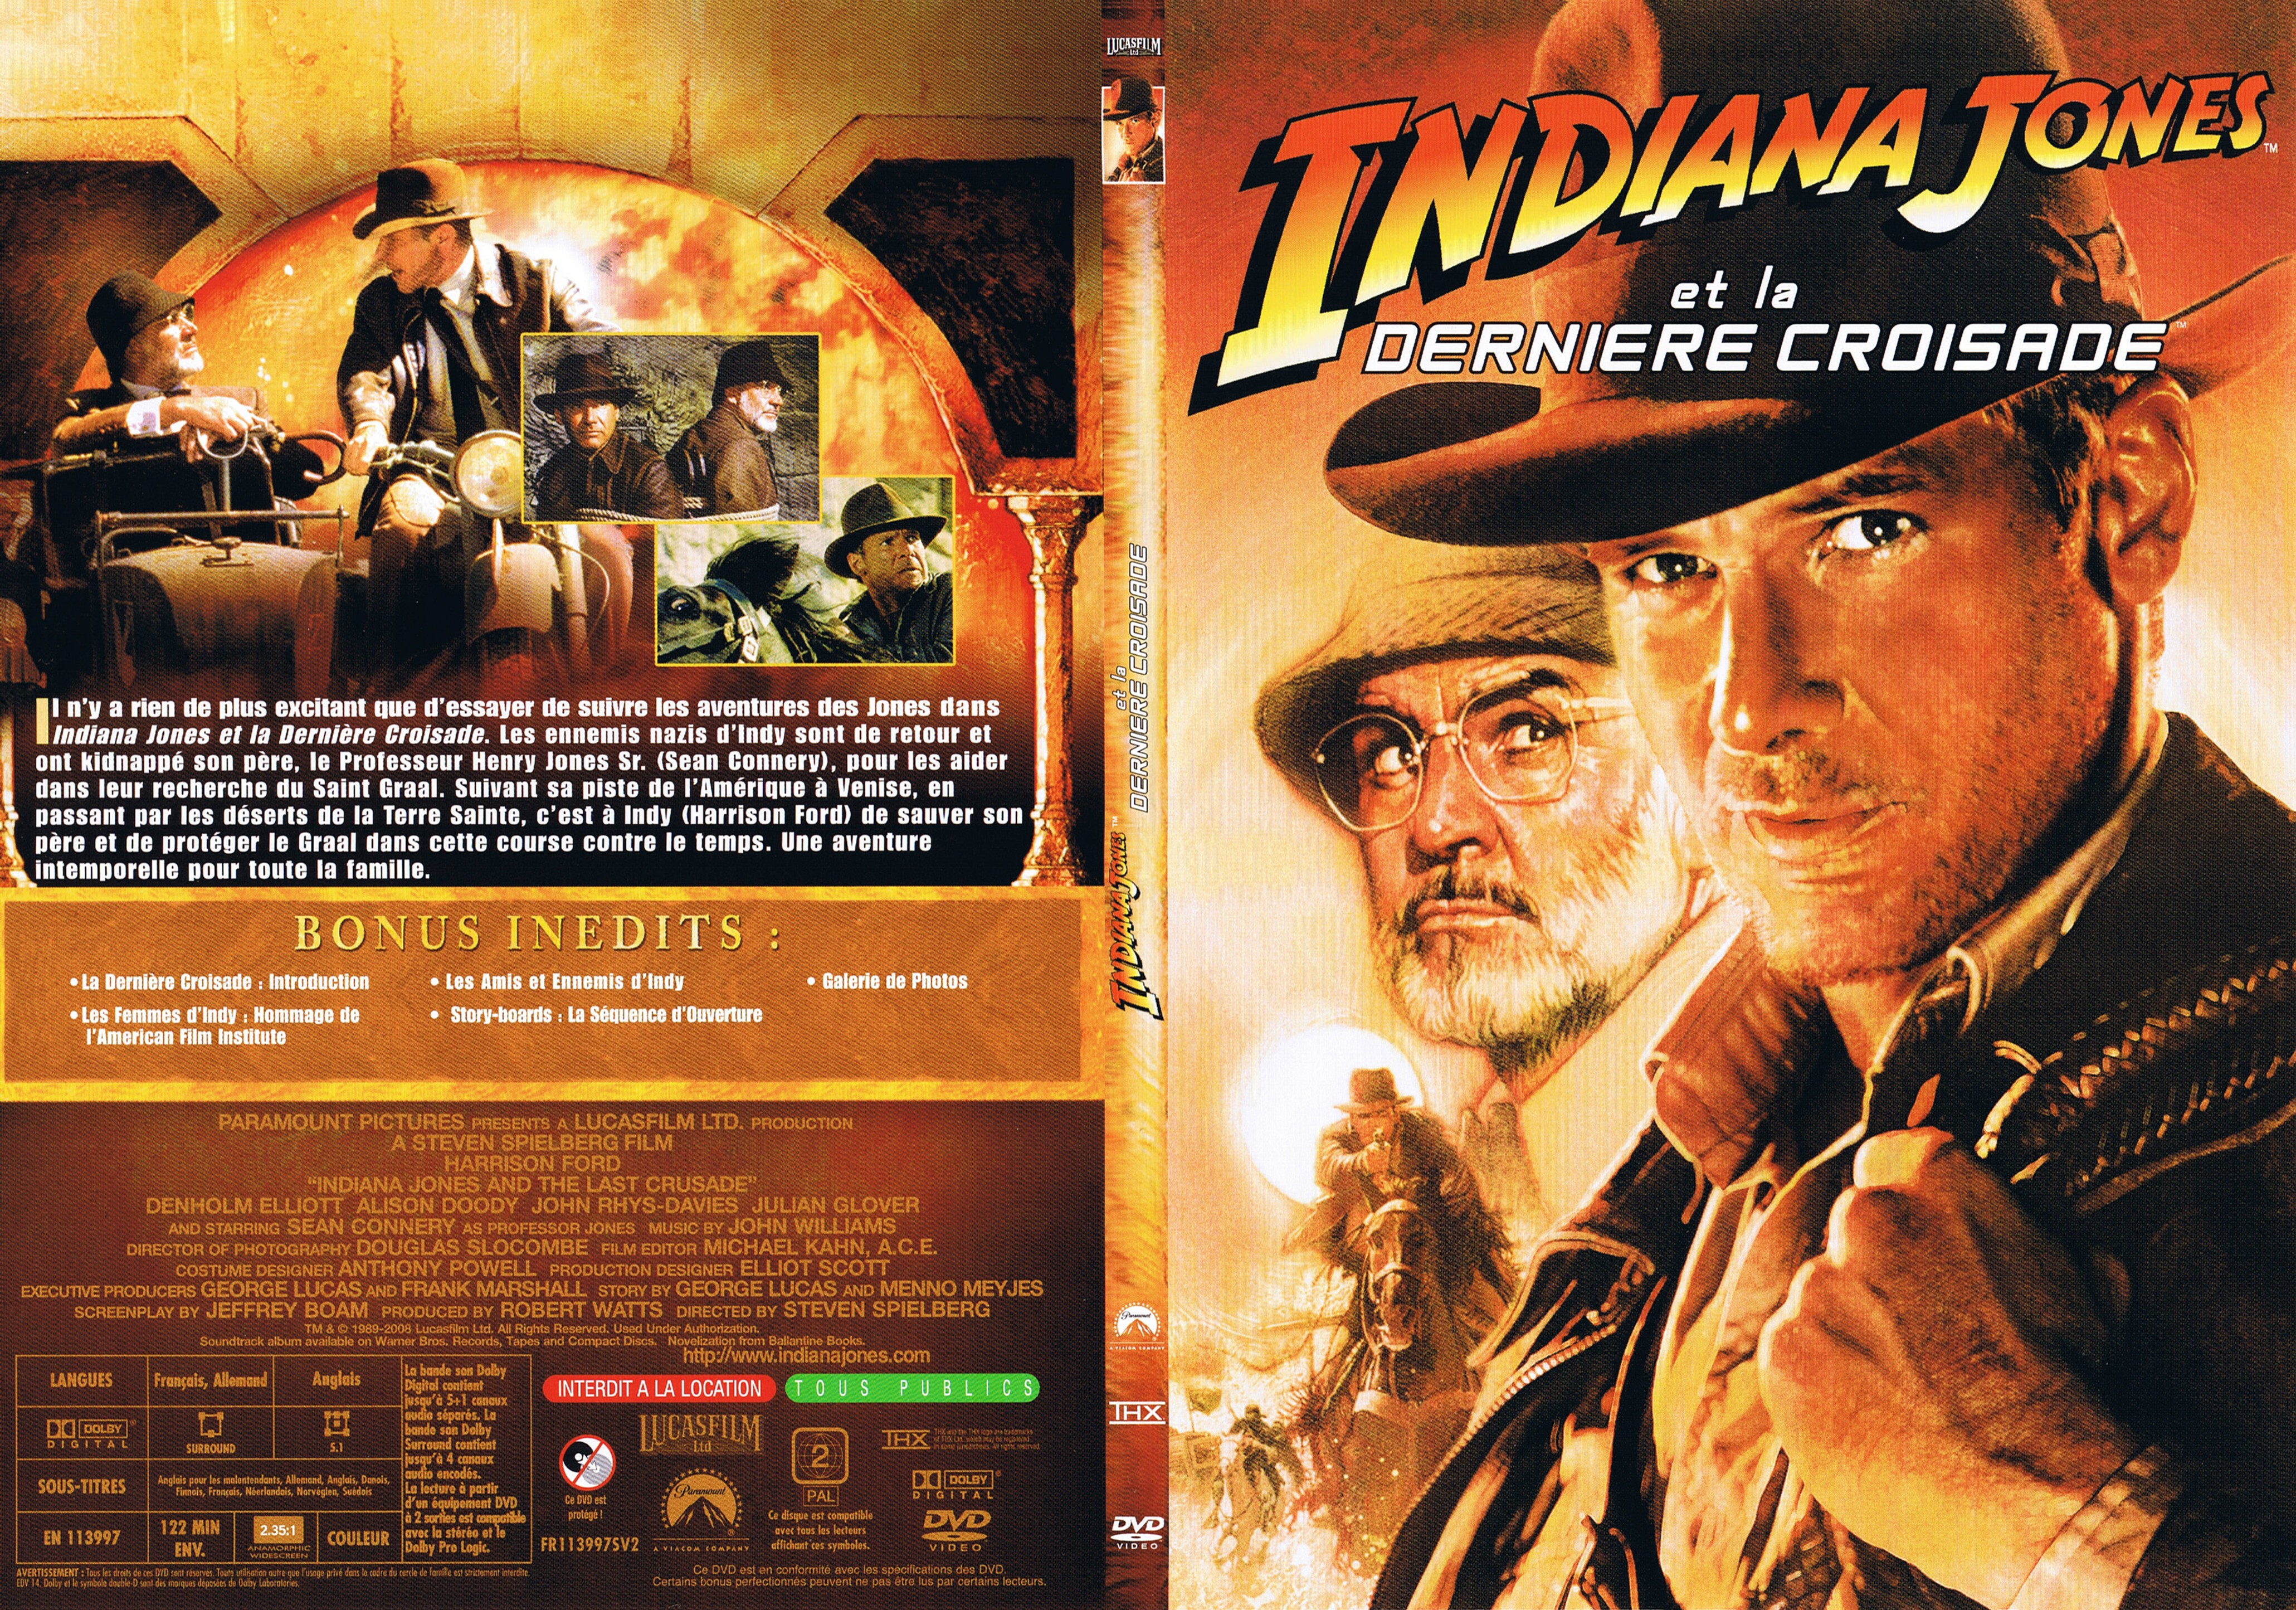 Jaquette DVD Indiana jones et la derniere croisade - SLIM v2